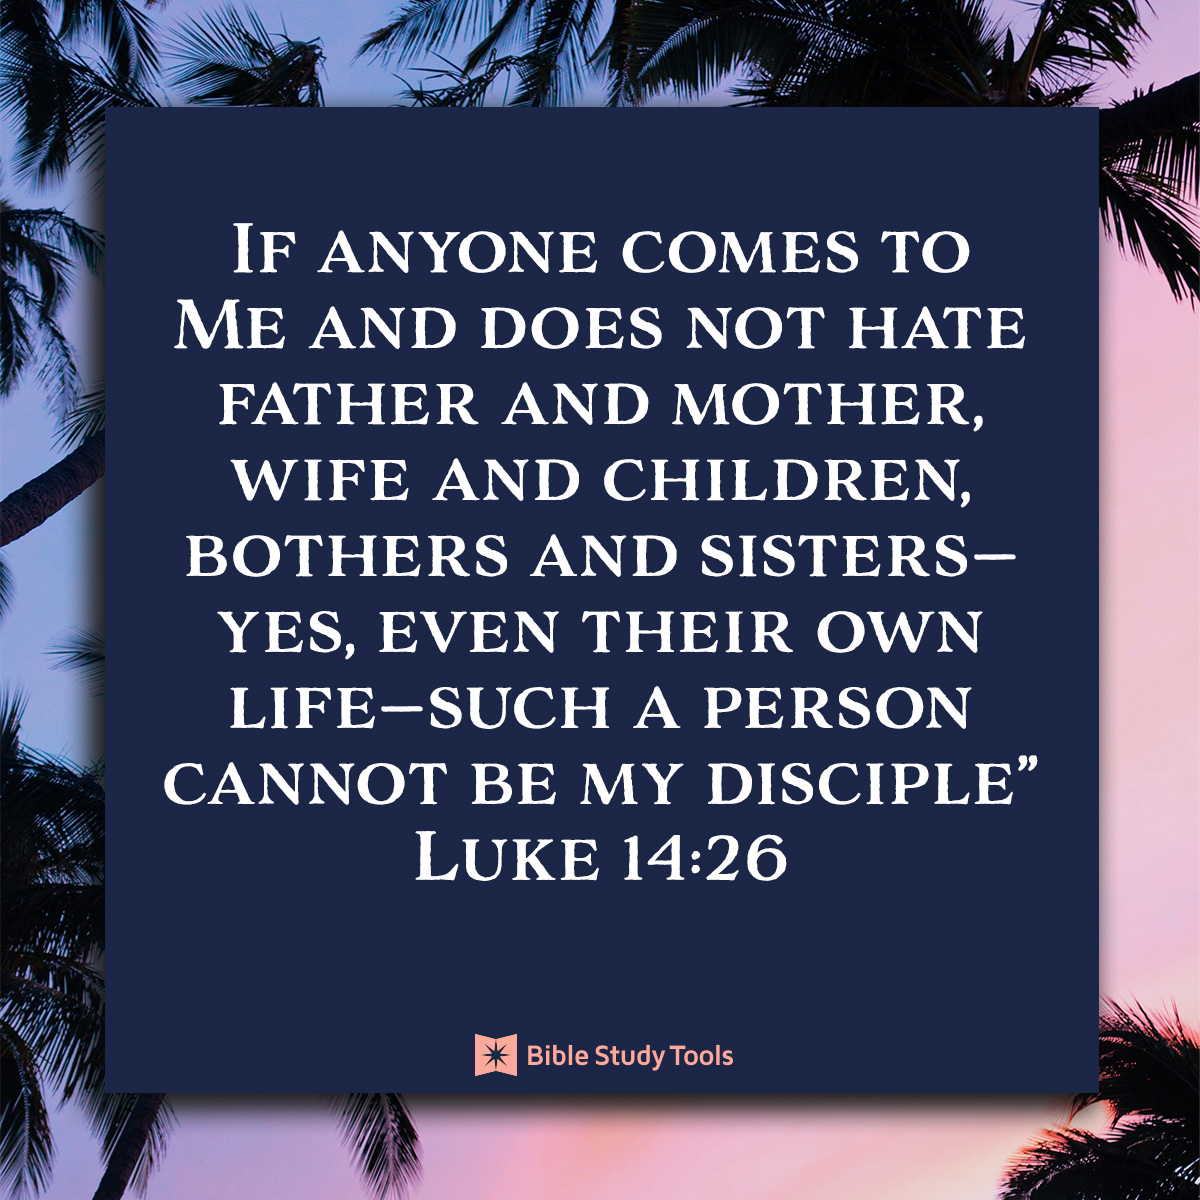 Luke 14:26, inspirational image